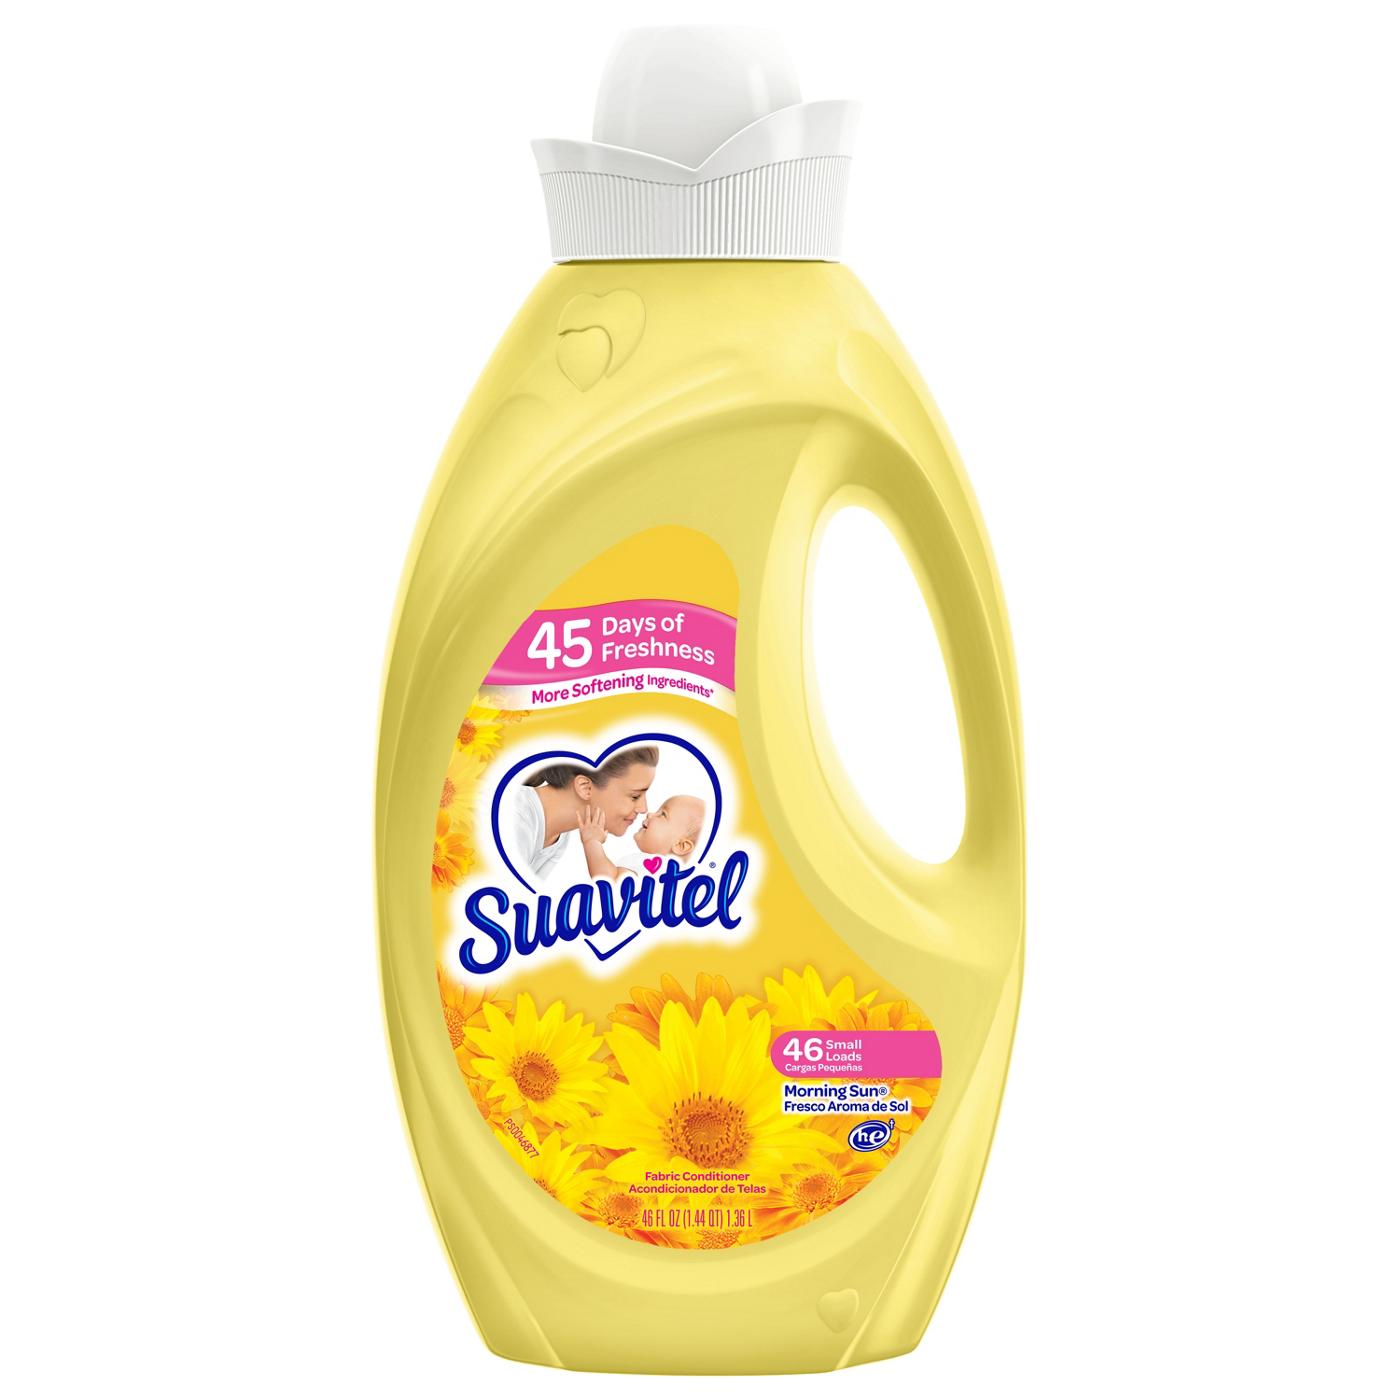 Suavitel HE Liquid Fabric Conditioner, 46 Loads - Morning Sun; image 1 of 2